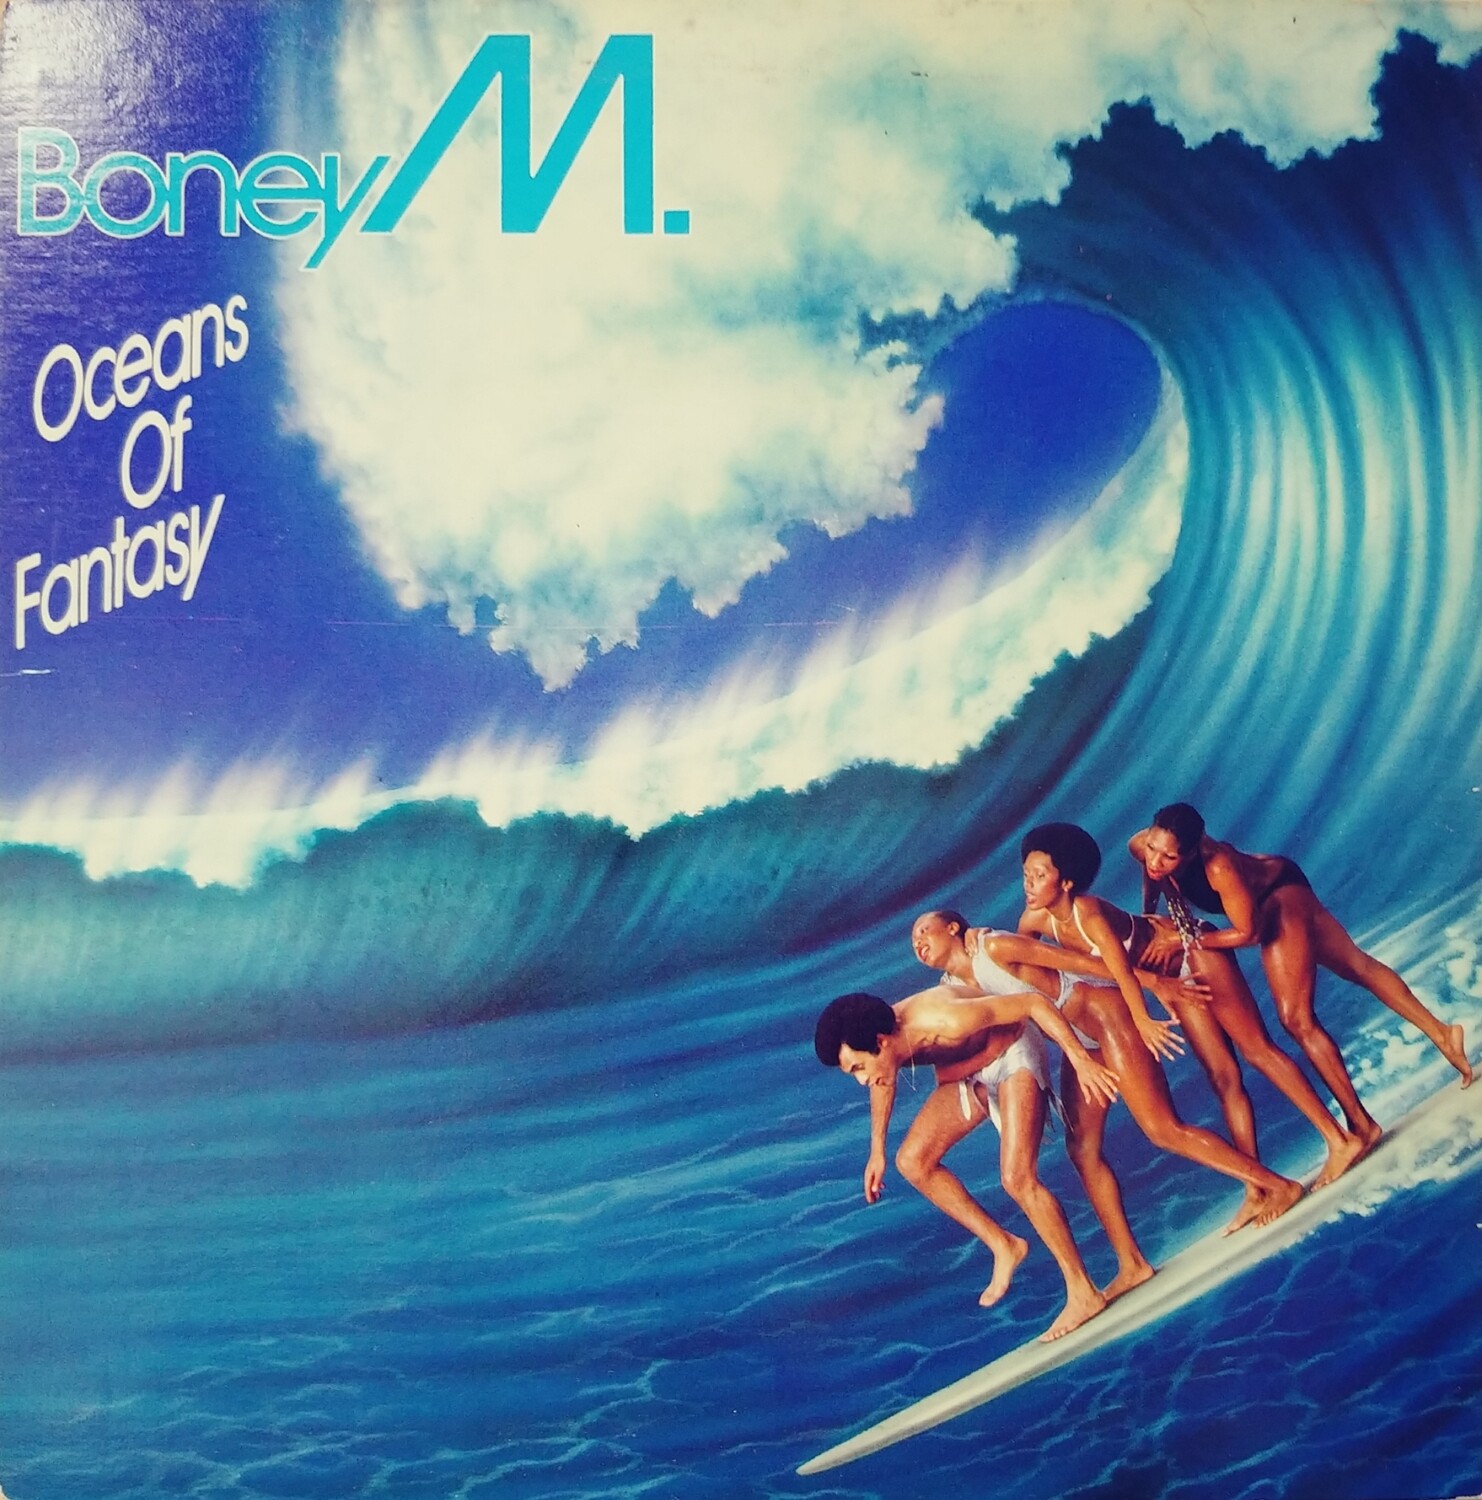 Boney M - Oceans of fantasy